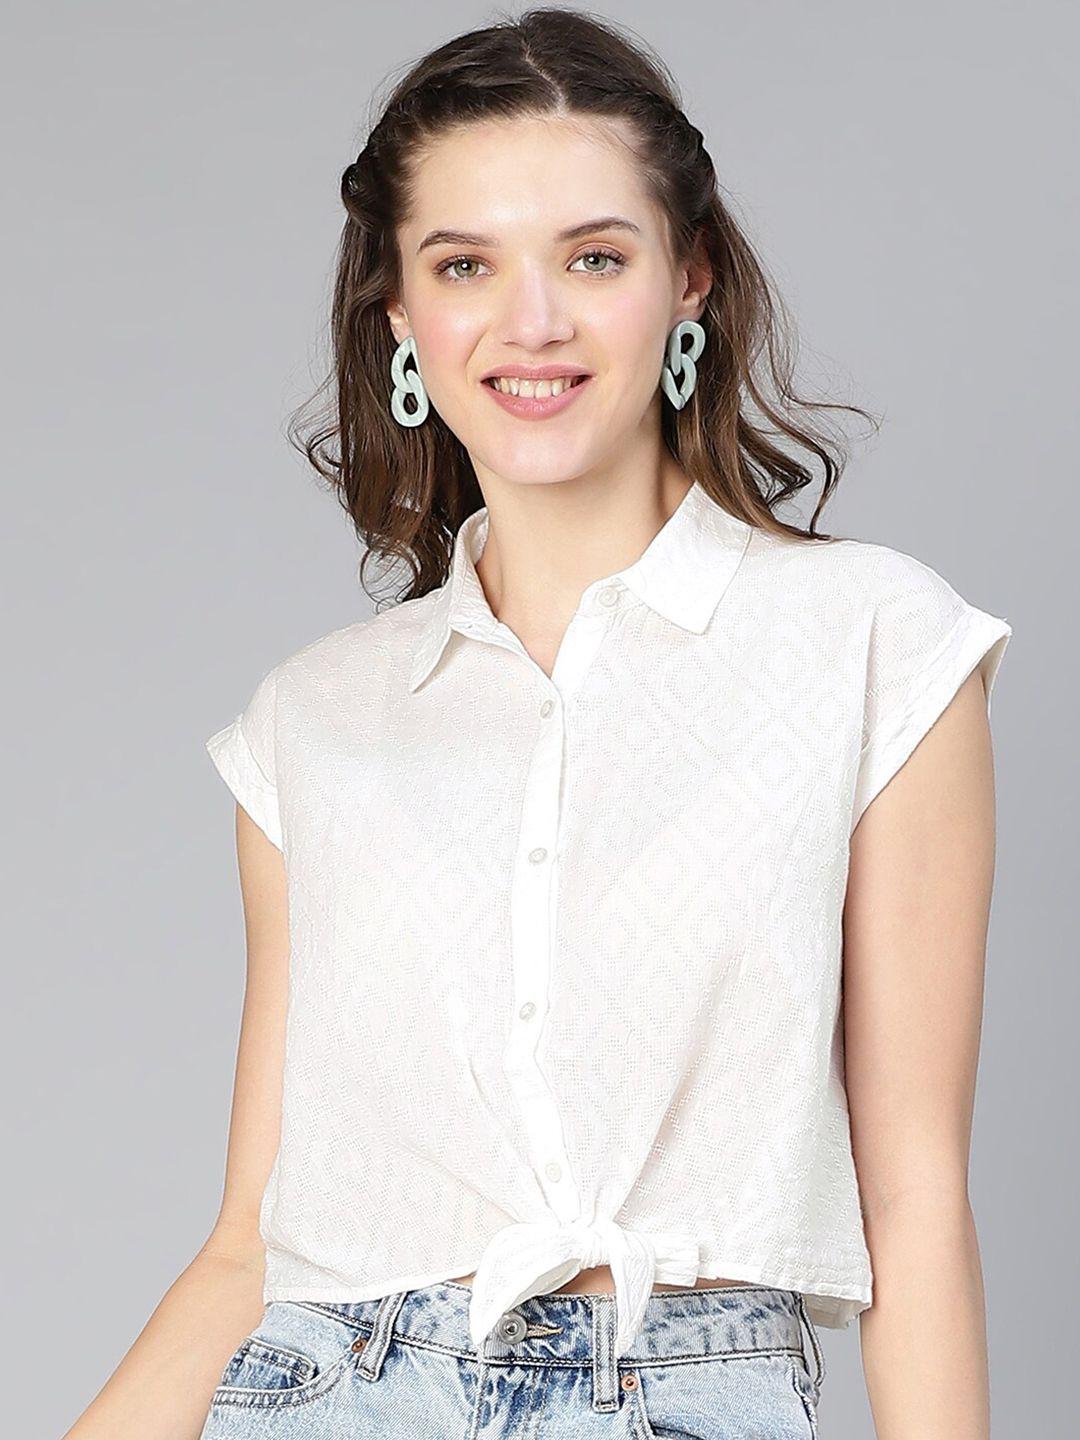 oxolloxo ethnic motifs printed cotton boxy shirt style top